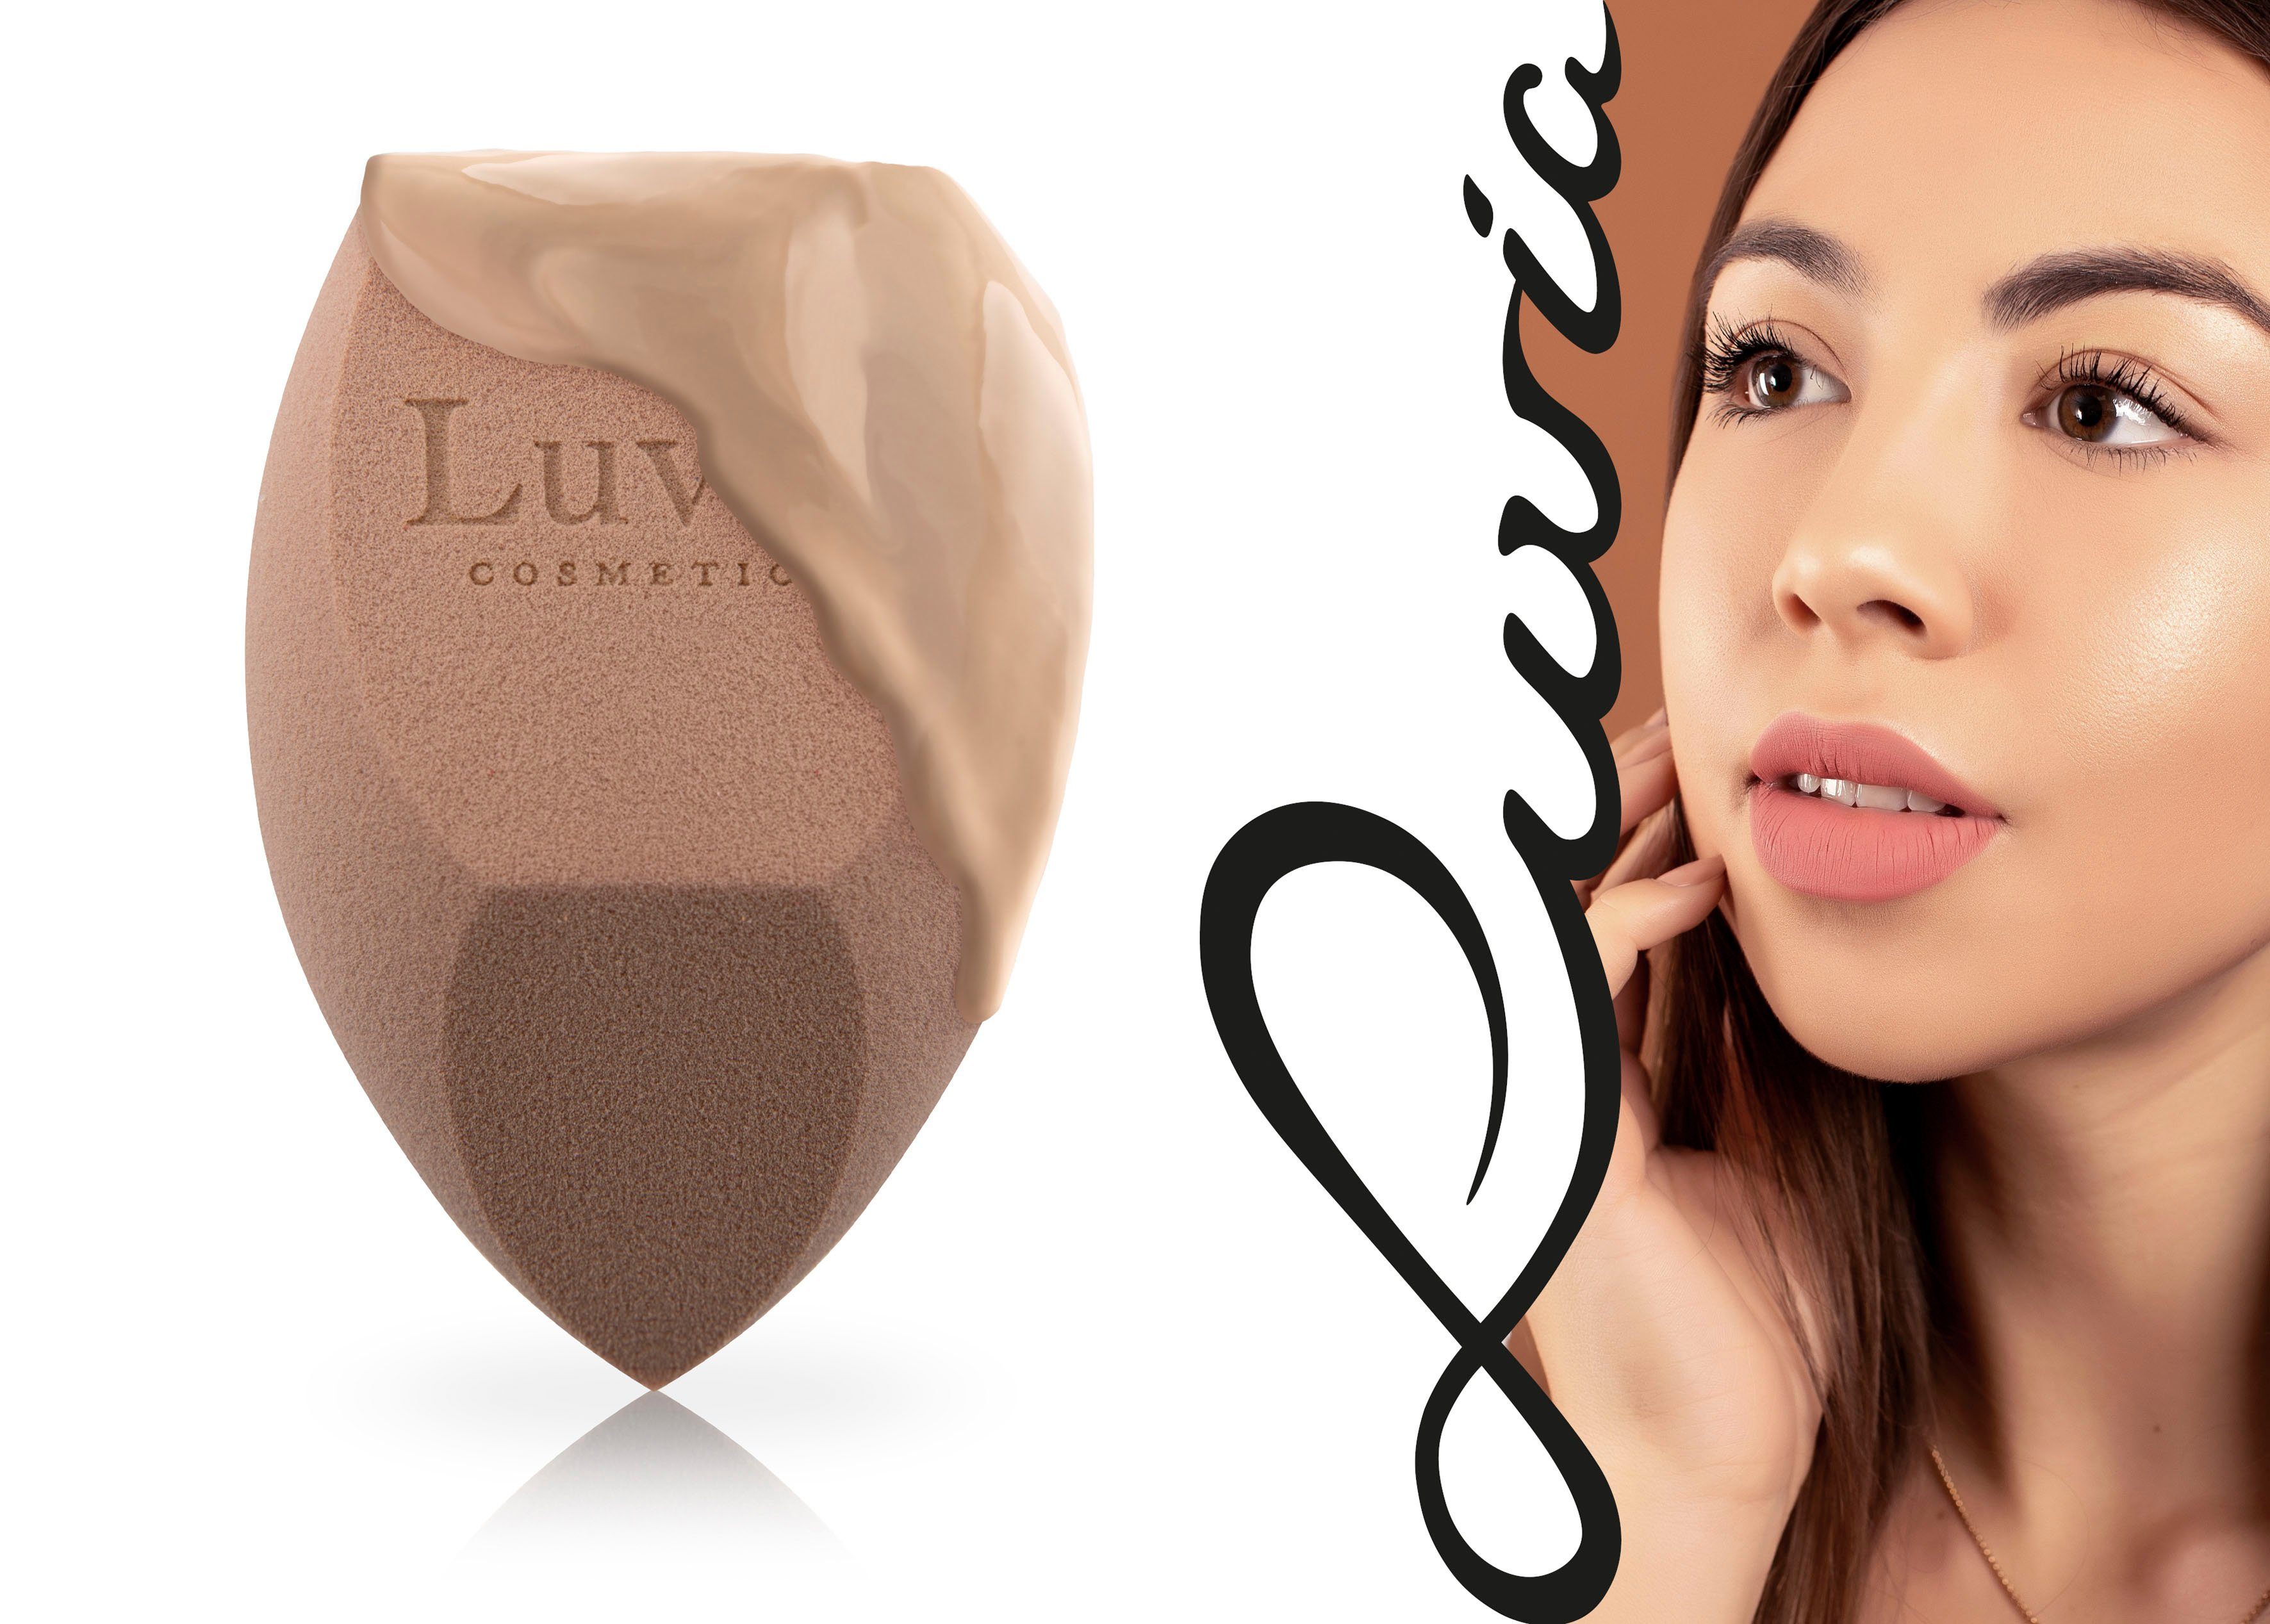 Luvia Cosmetics Schwamm Prime Vegan Make-up Body Schwamm XXL Sponge, Make-up